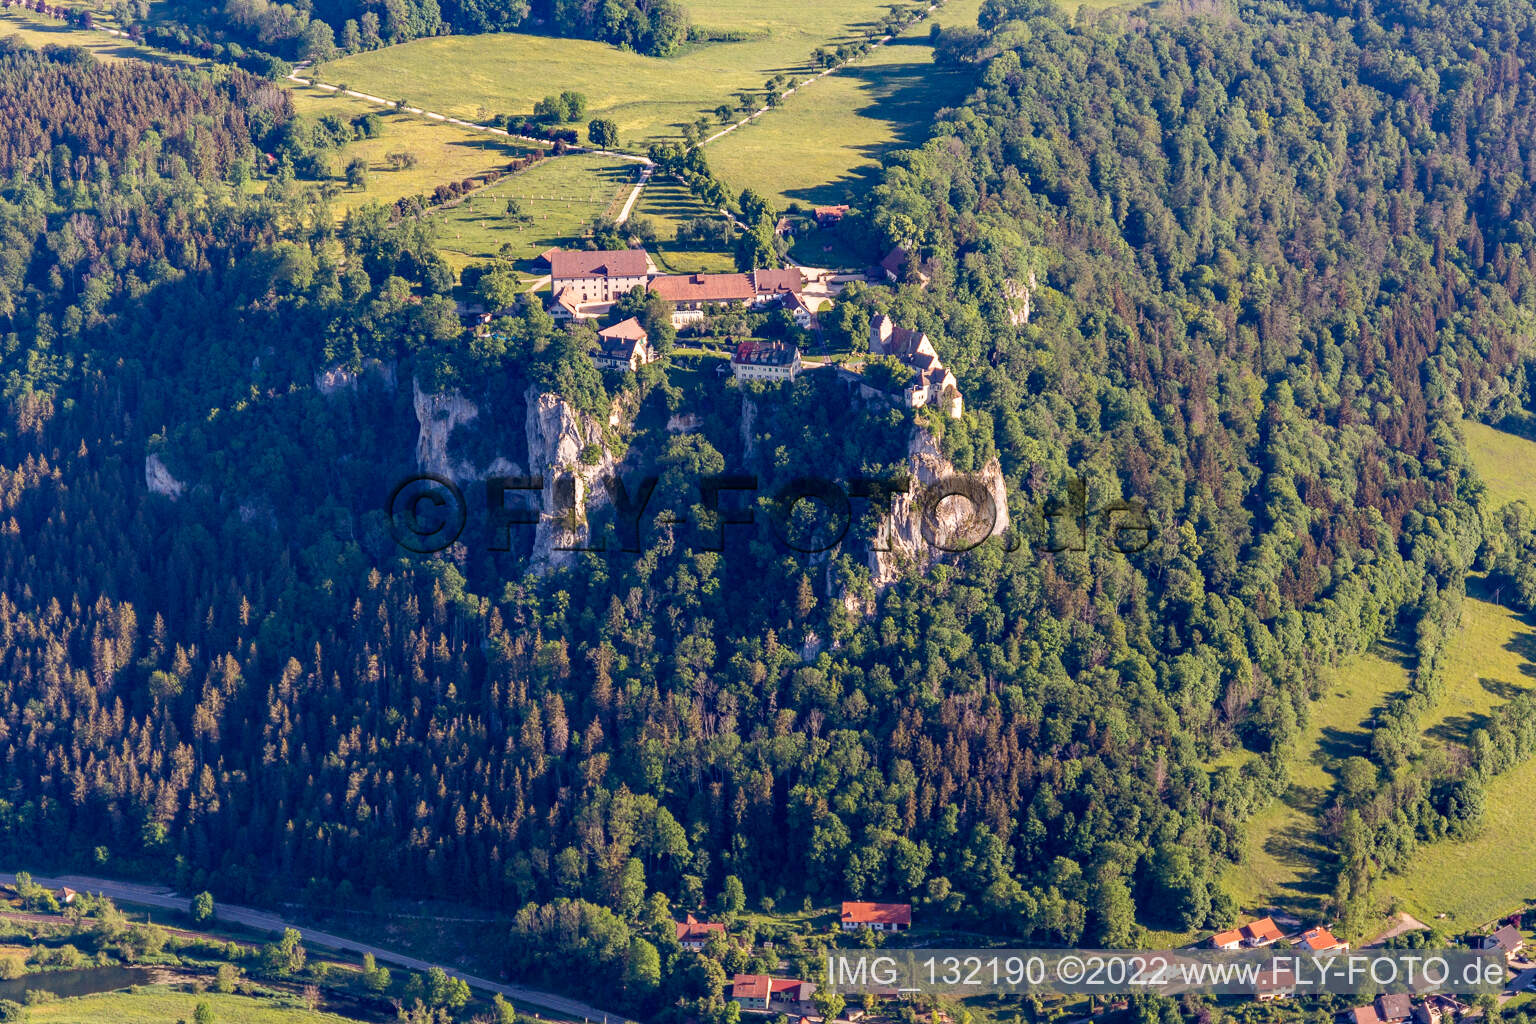 Vue aérienne de DJH Auberge de Jeunesse Burg Wildenstein à Leibertingen dans le département Bade-Wurtemberg, Allemagne